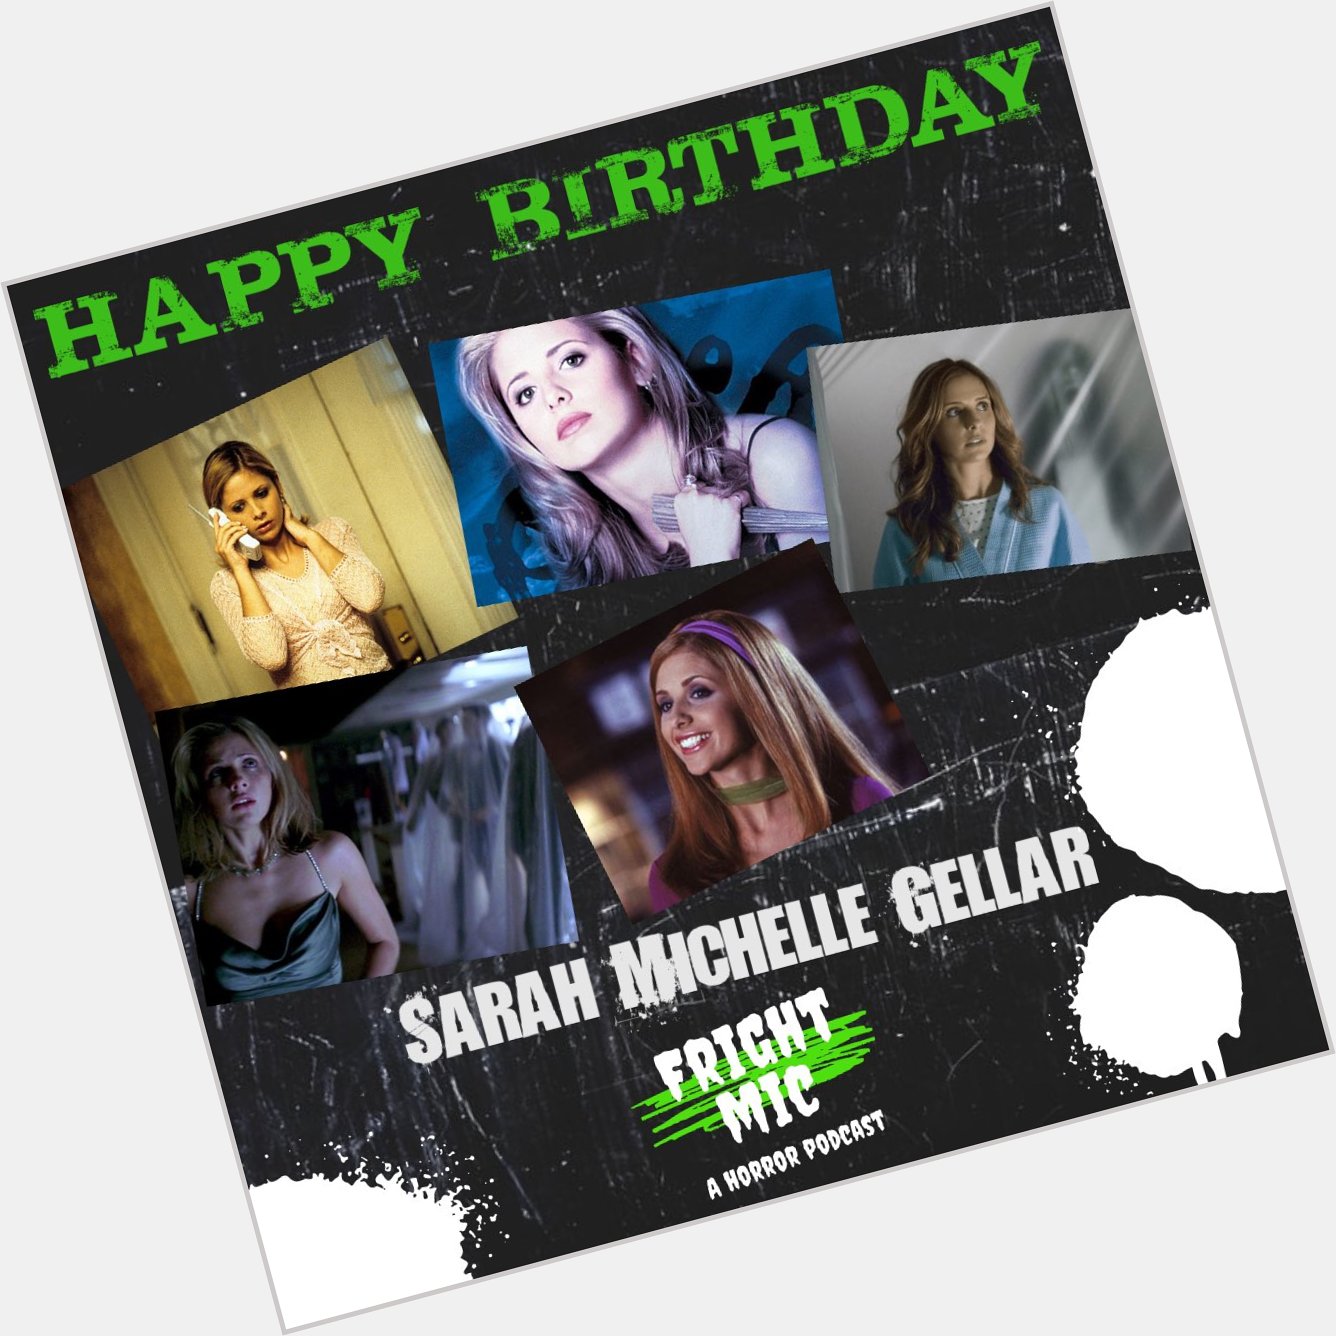 Happy birthday to SARAH MICHELLE GELLAR-born in 1977! 